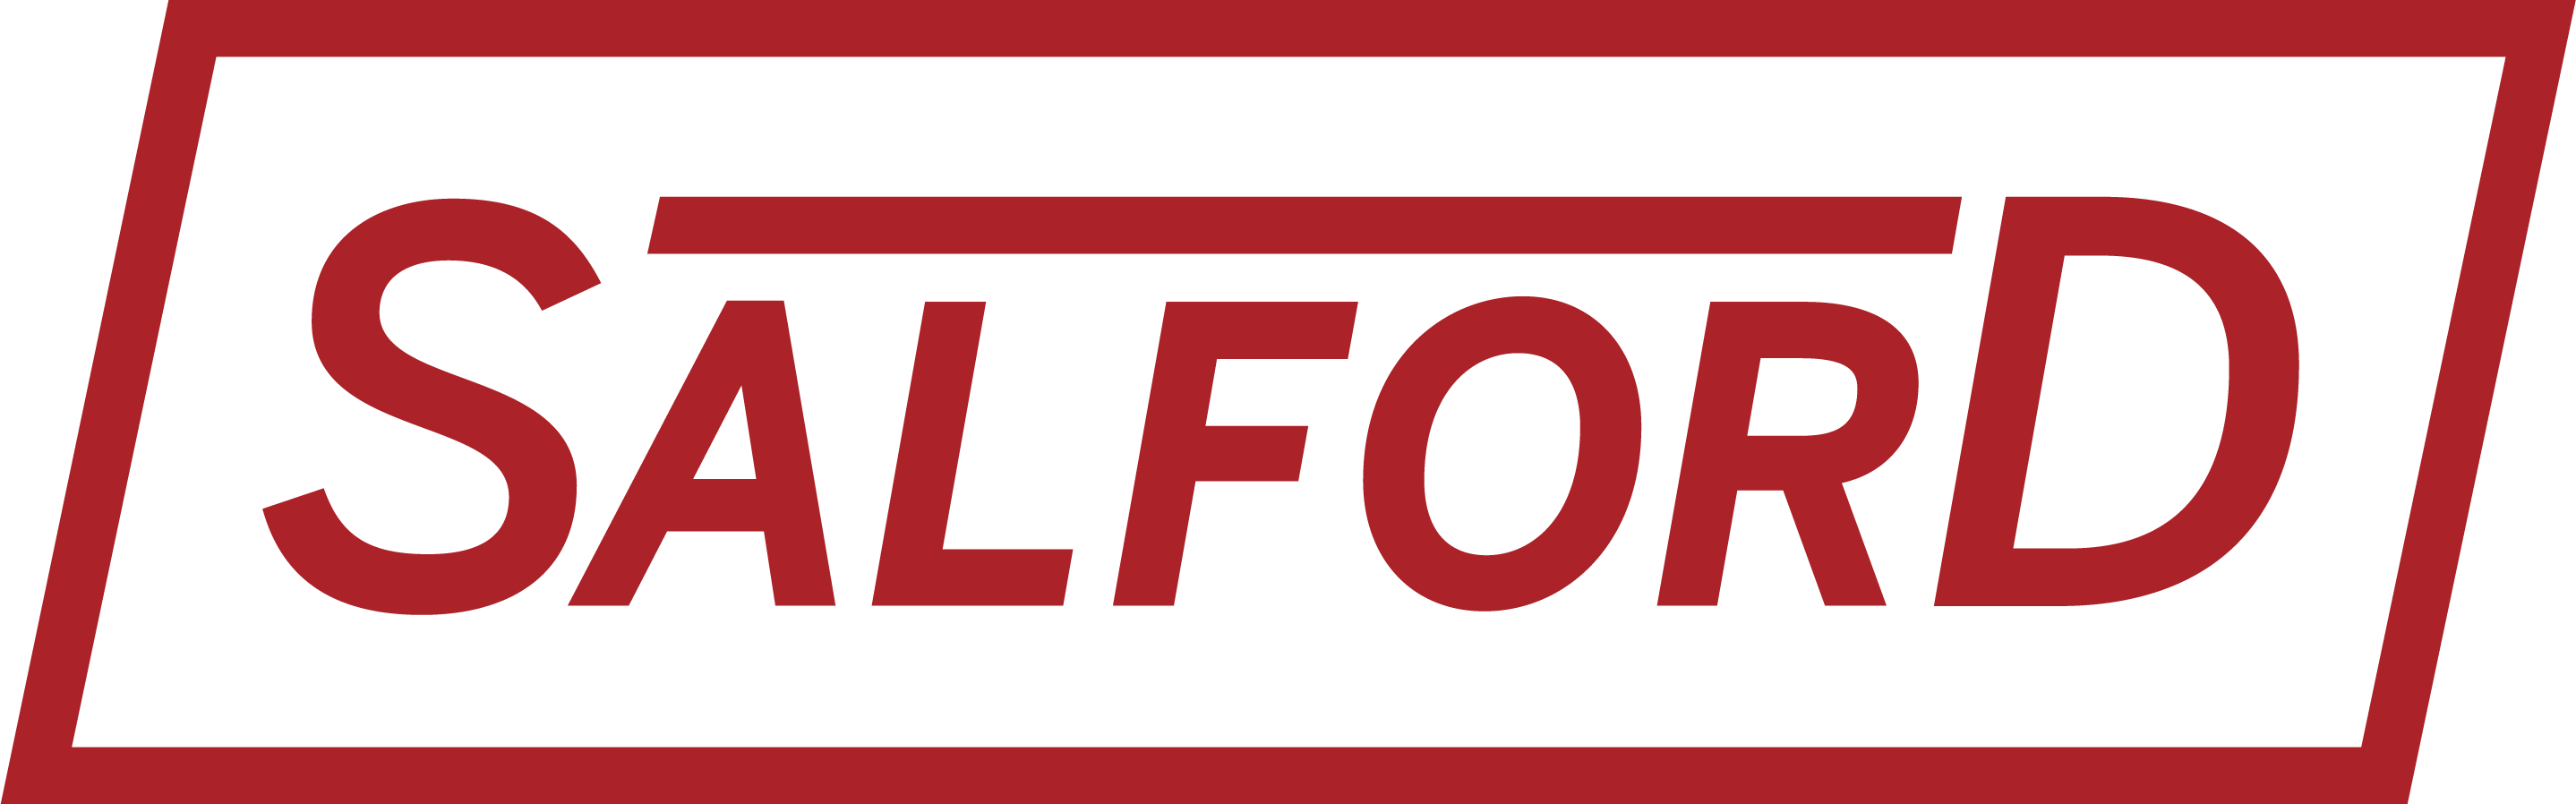 Salford_Logo_2021__RED.png